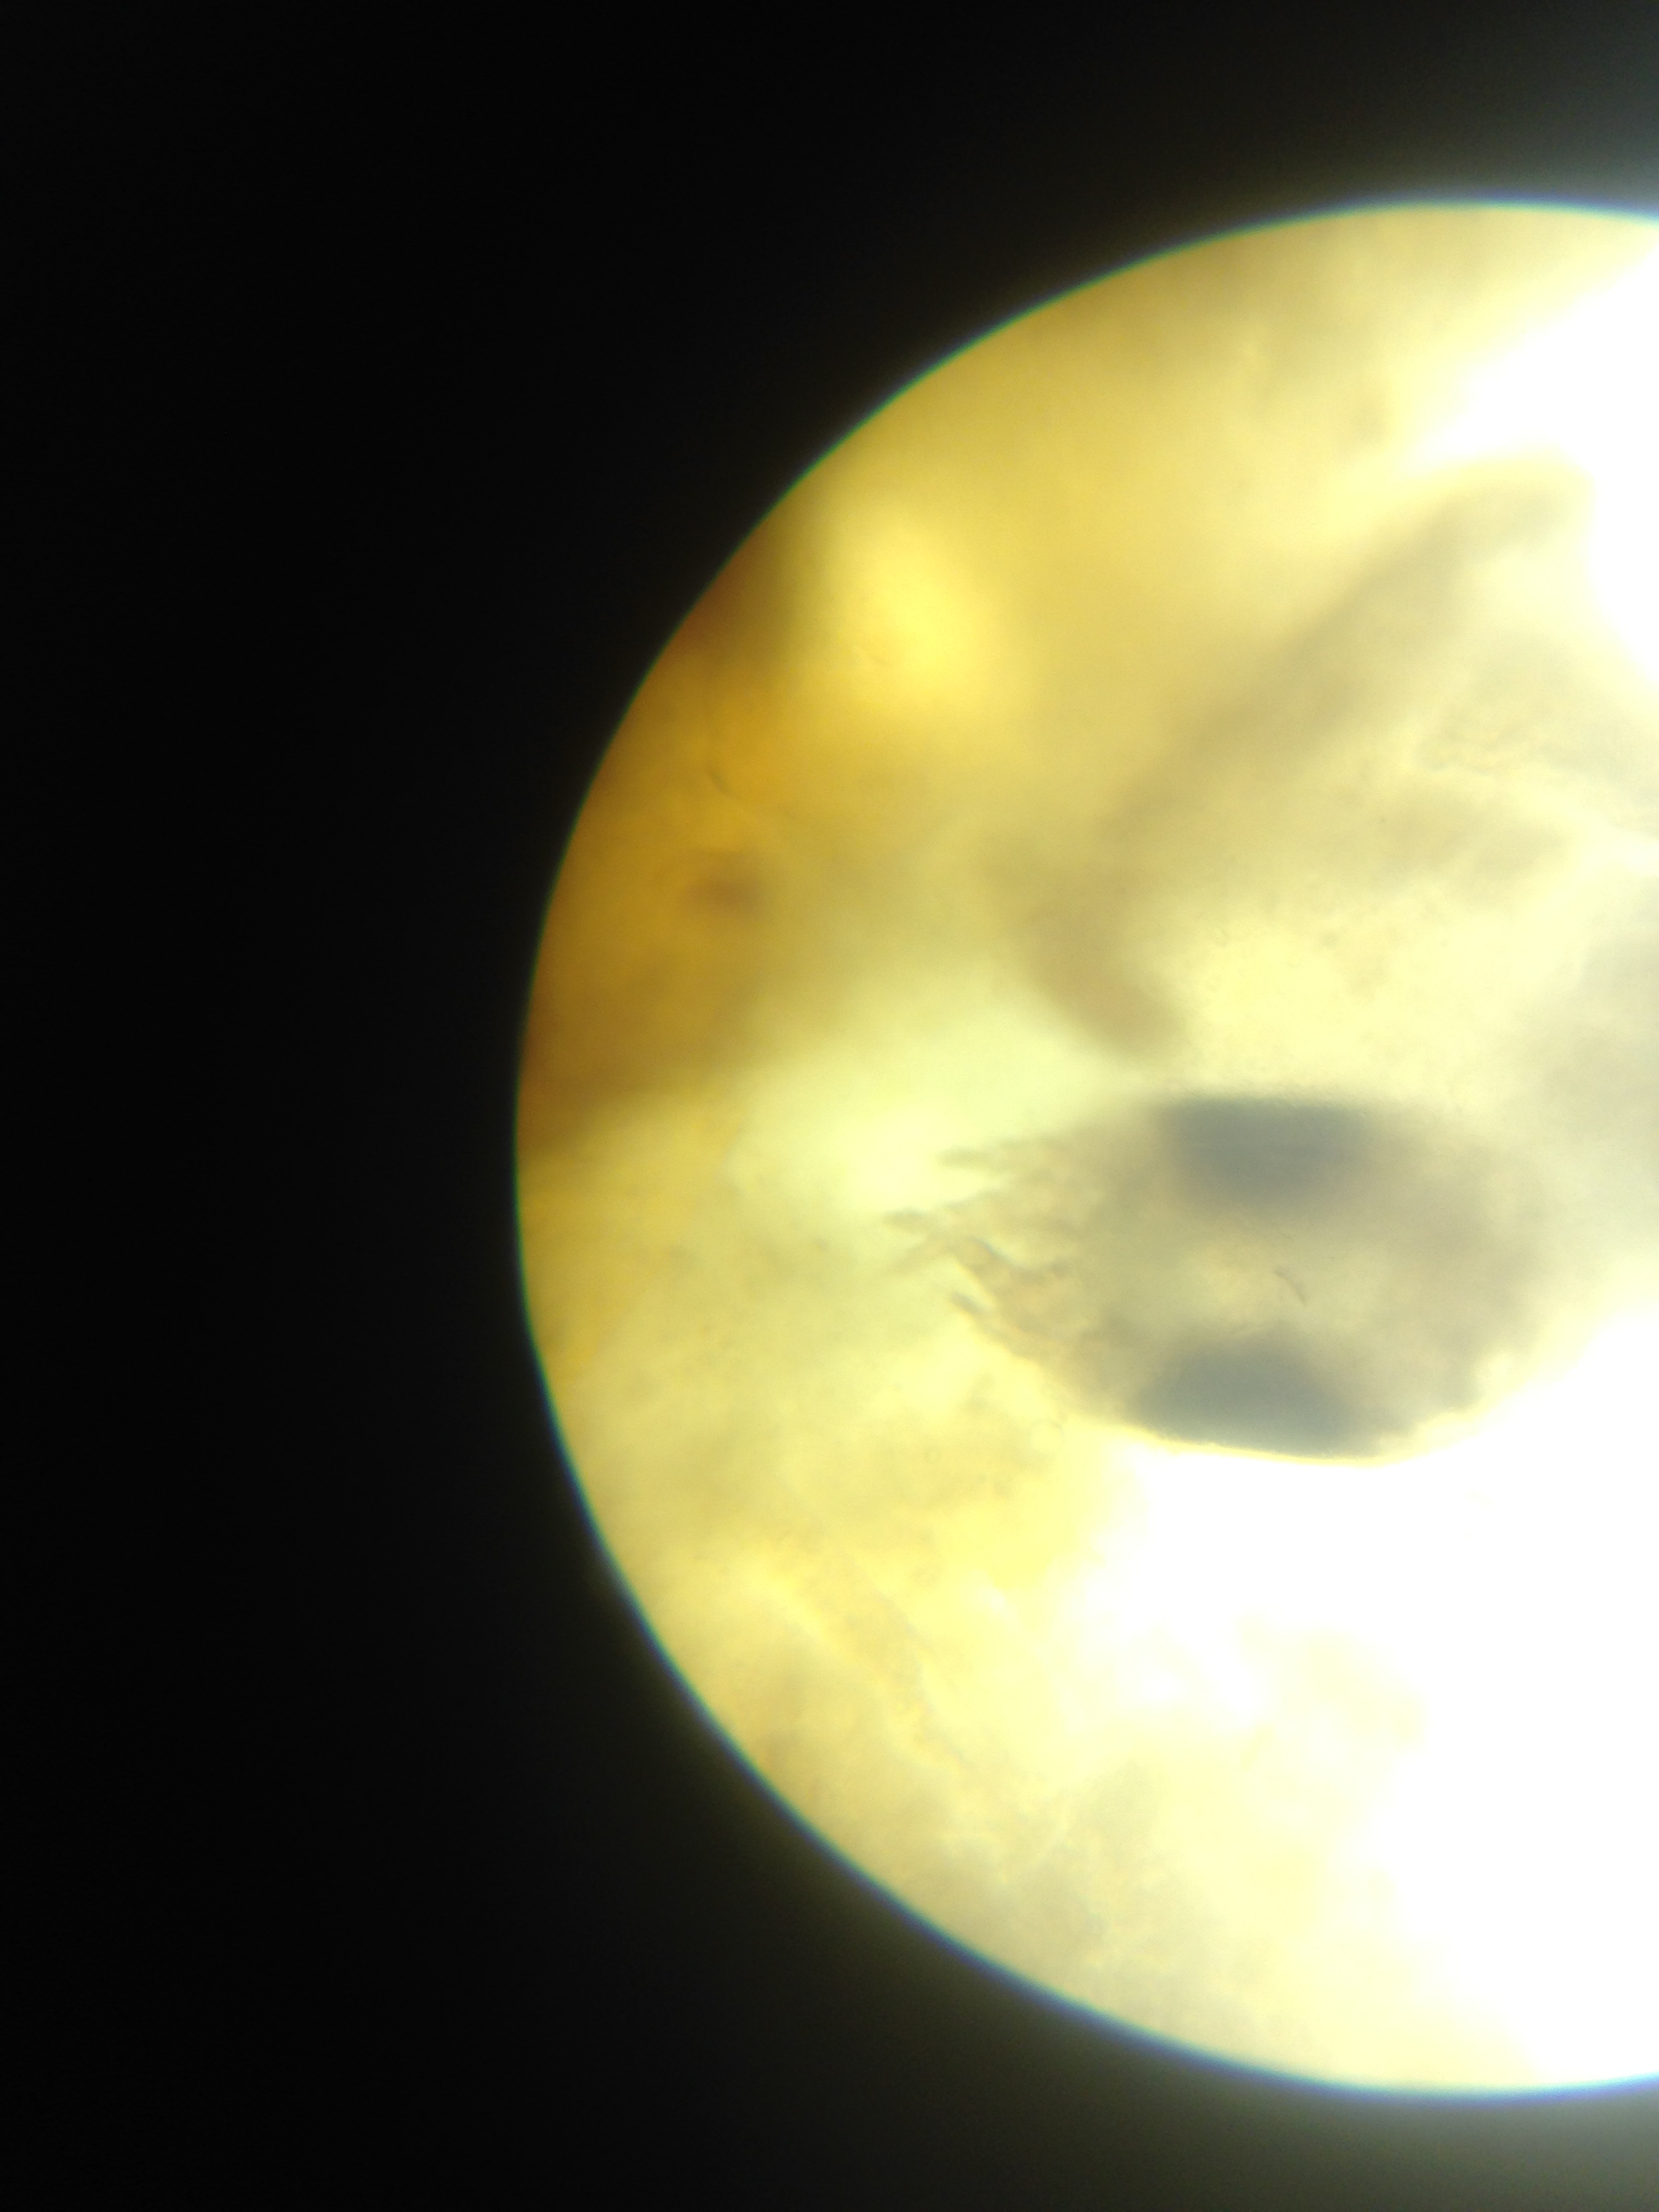 Mange mite under microscope